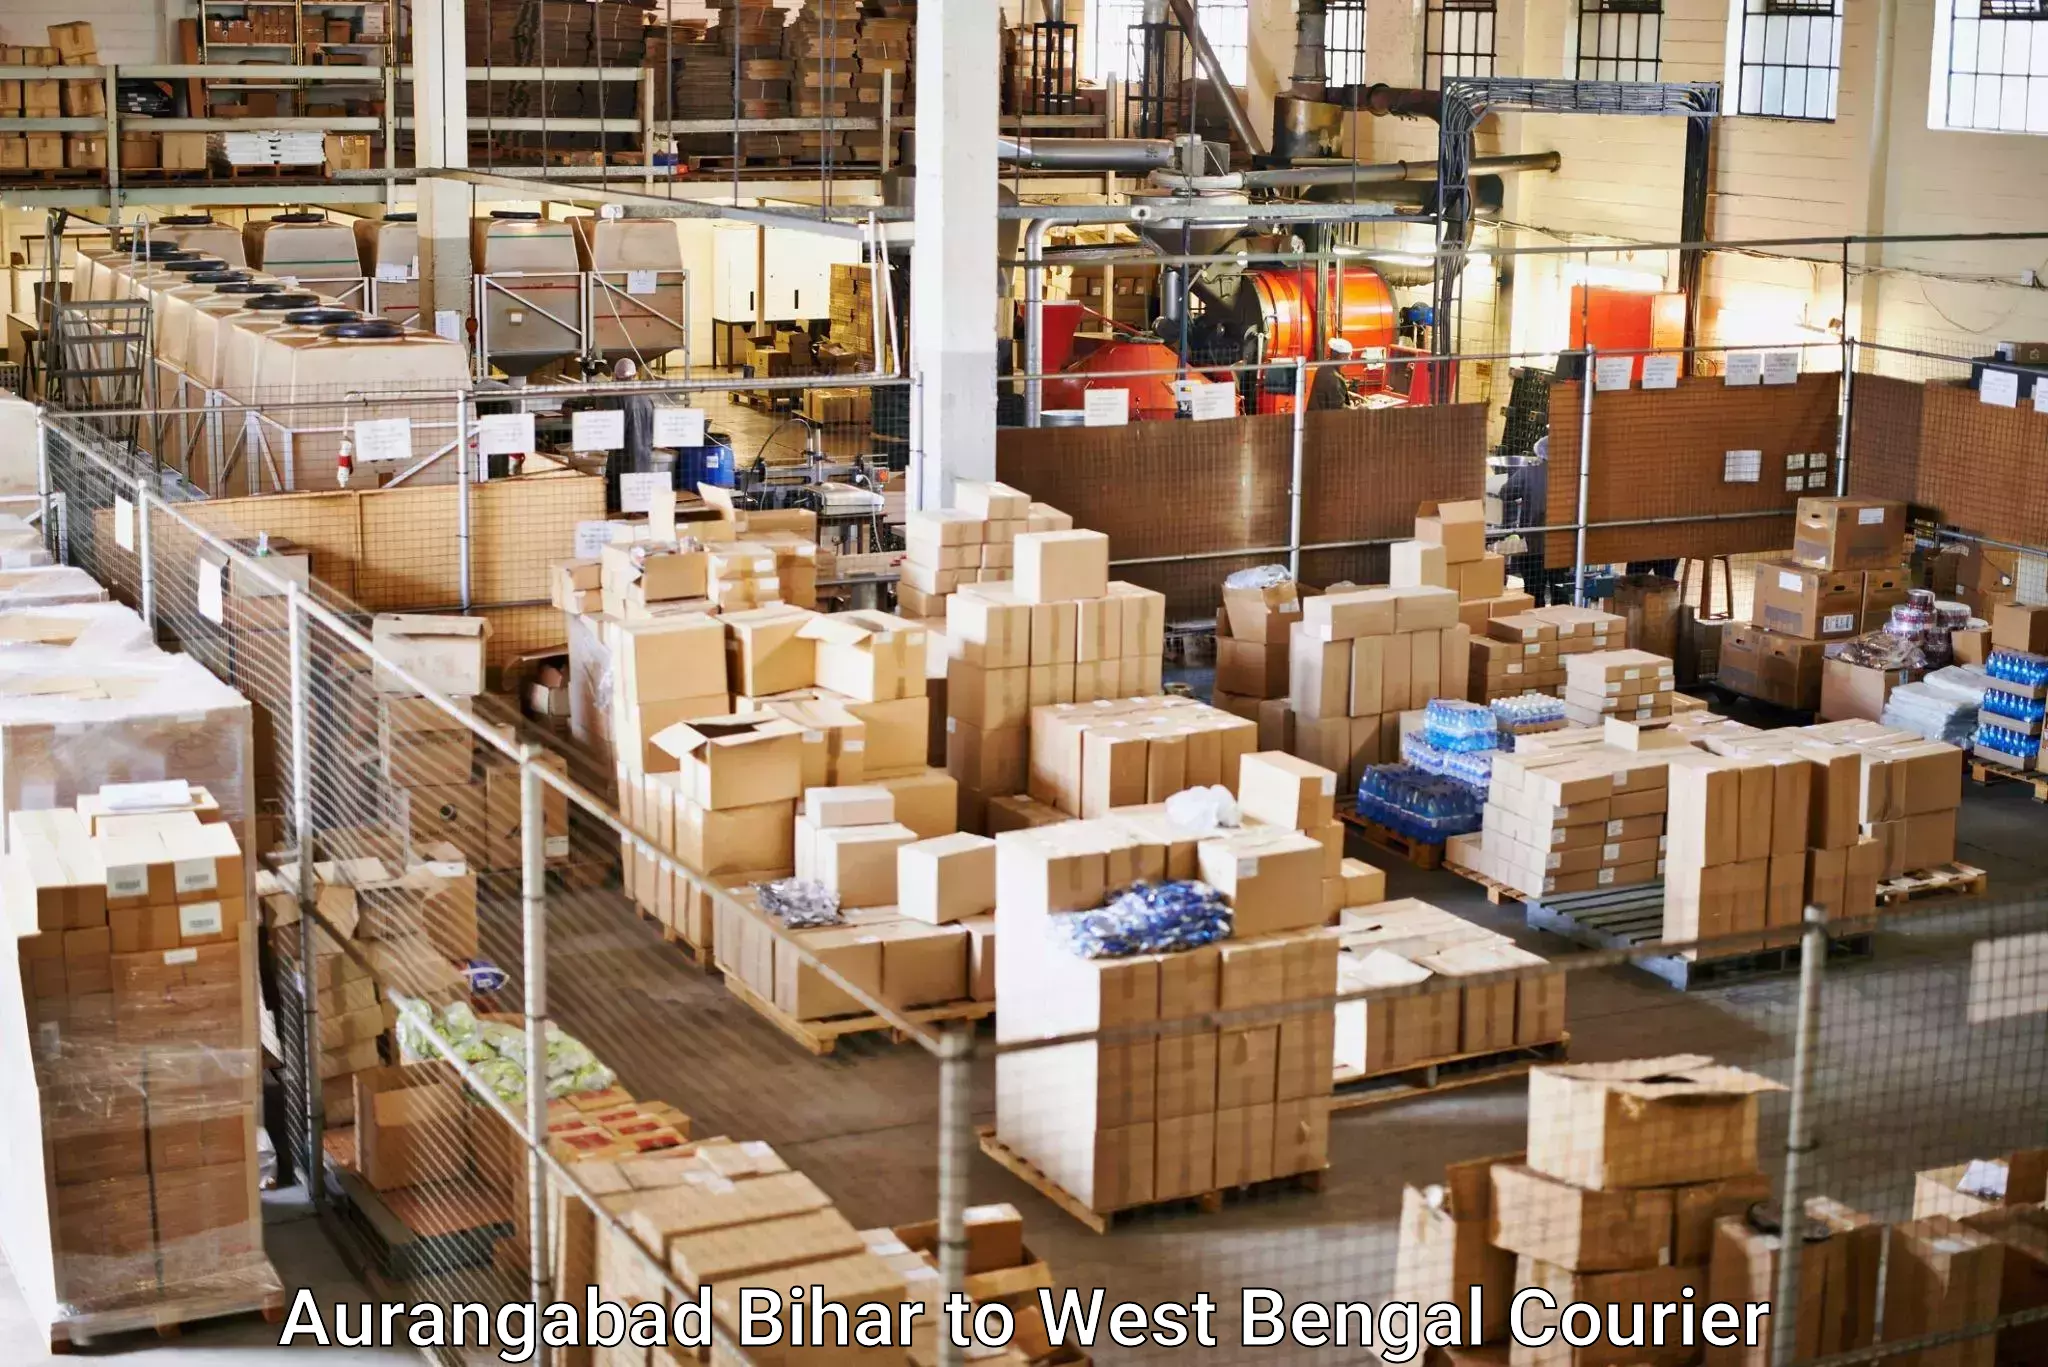 Courier service partnerships Aurangabad Bihar to Nakashipara